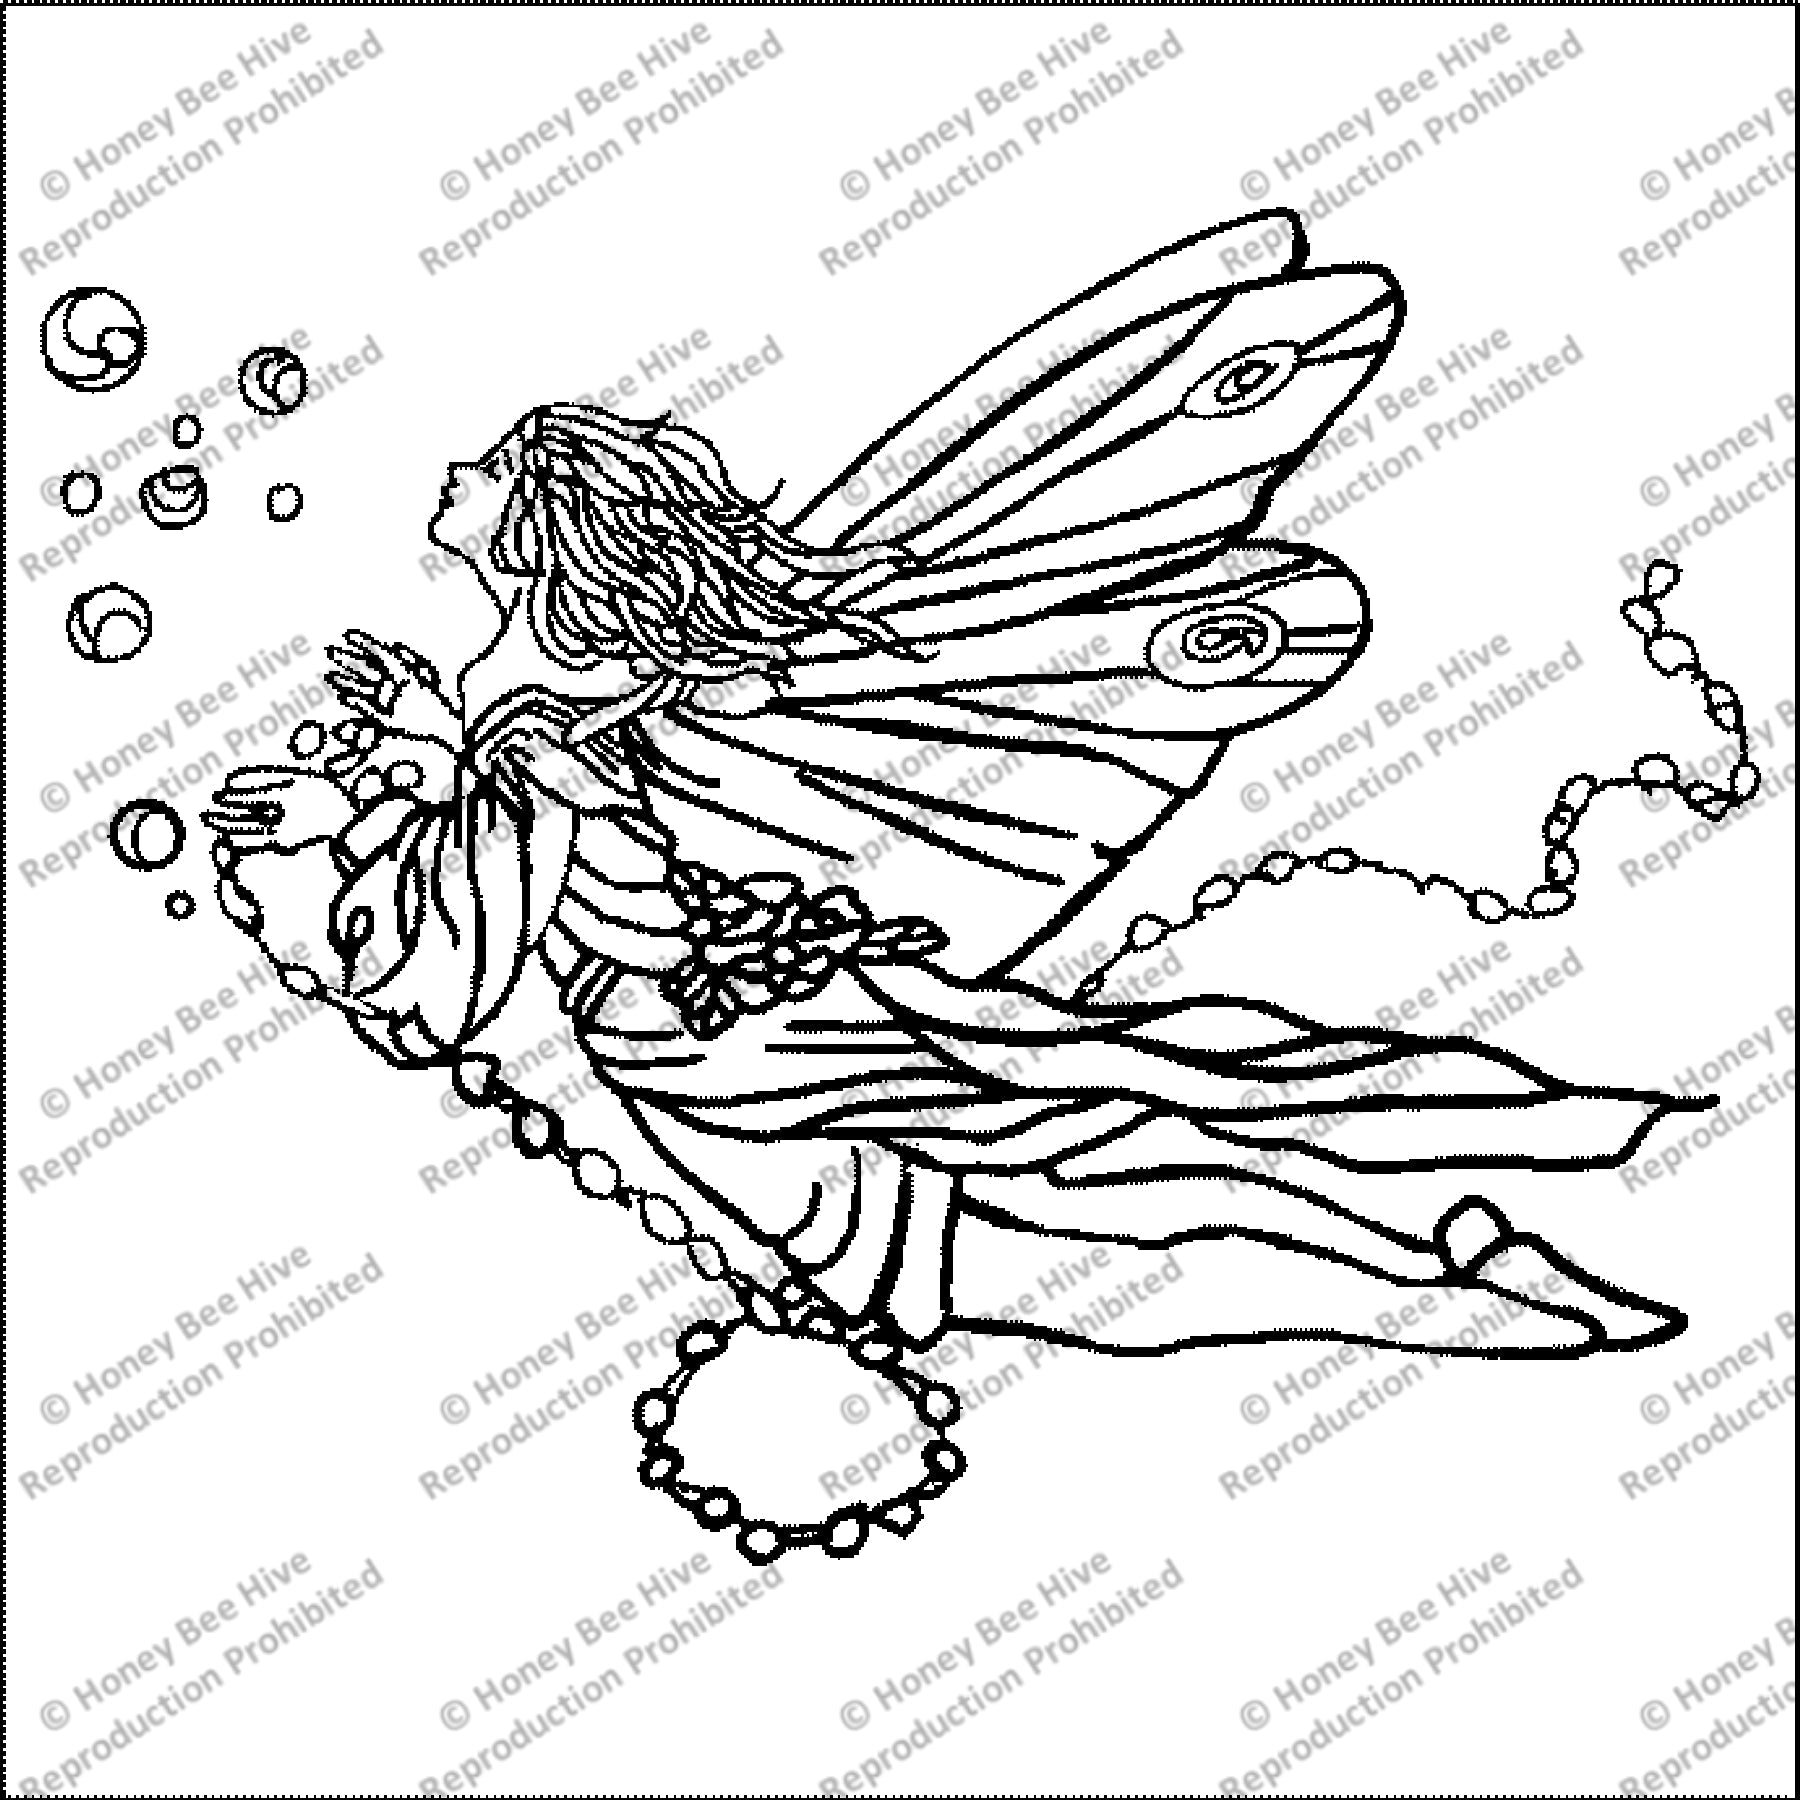 Fairy Adaptation - Bubble Fairy, rug hooking pattern